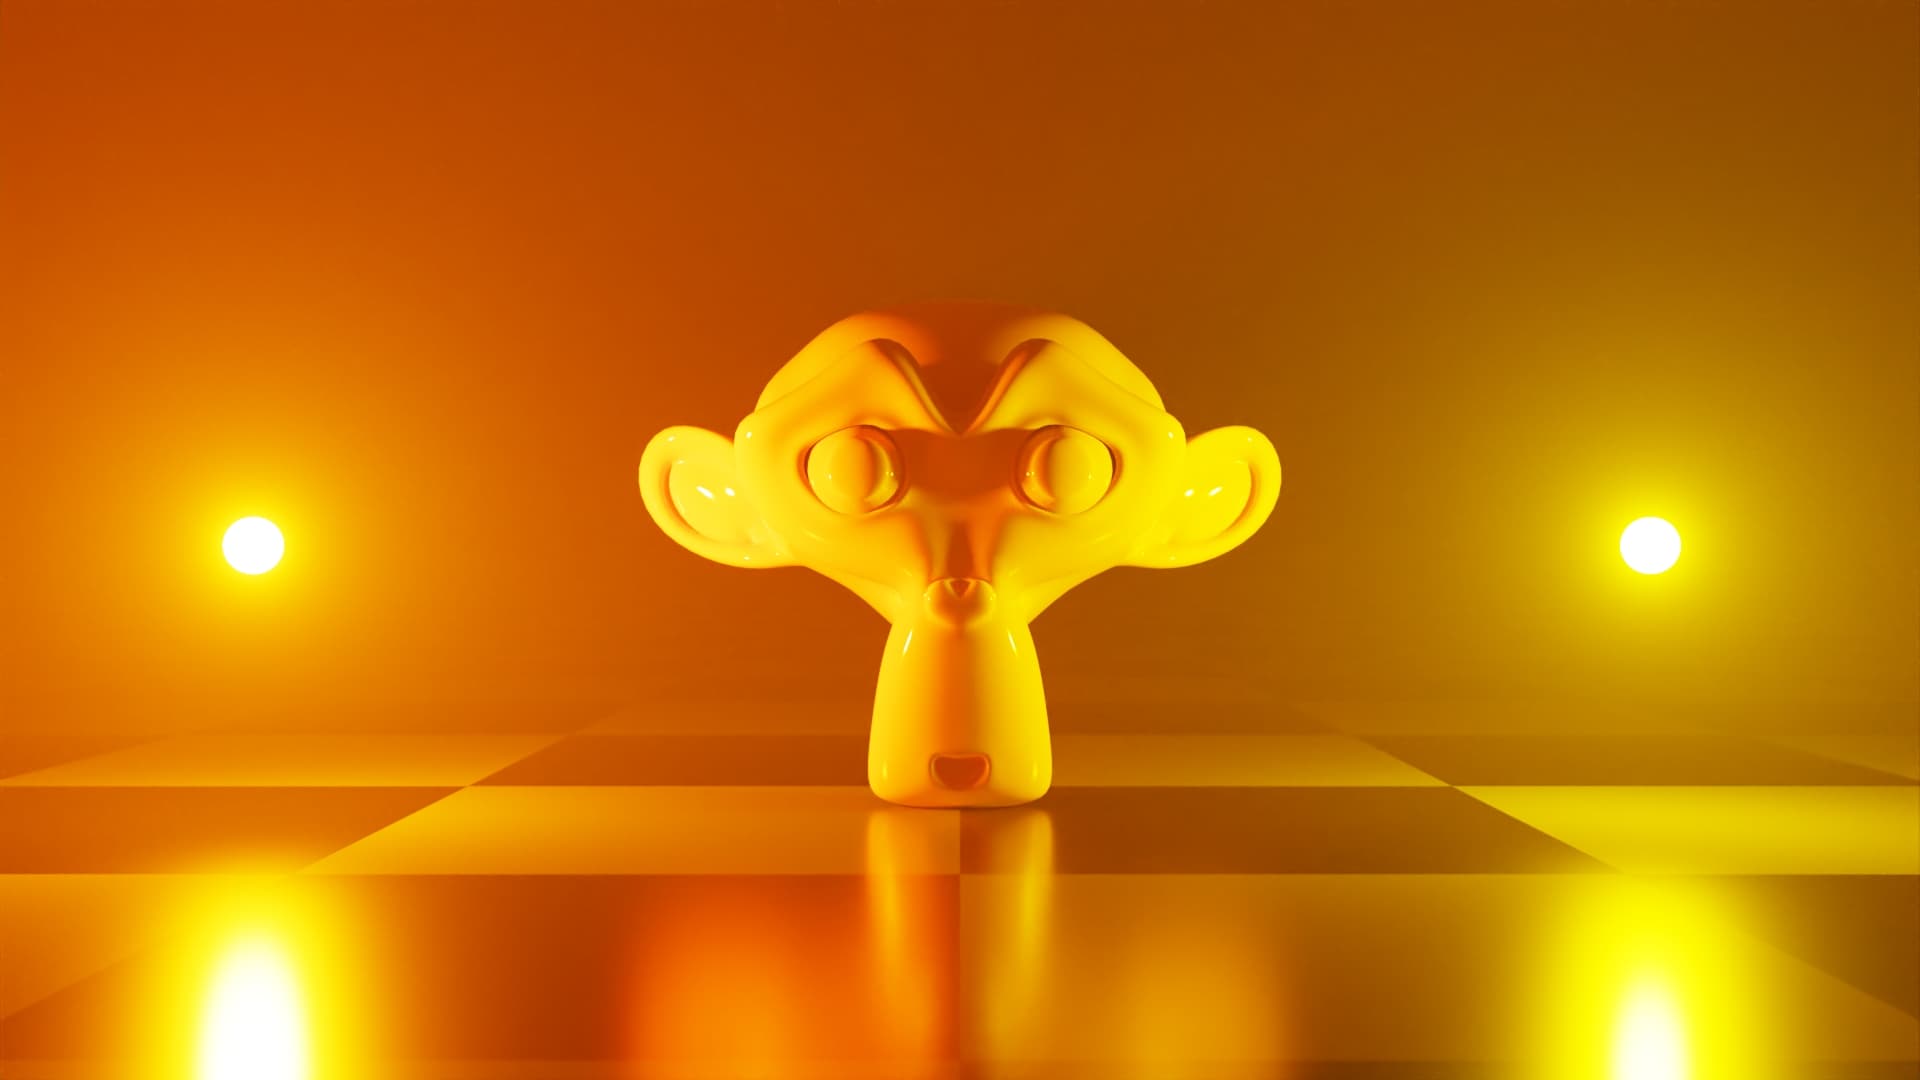 Filmic High Contrast AgX Demo Monkey Head Orange Light